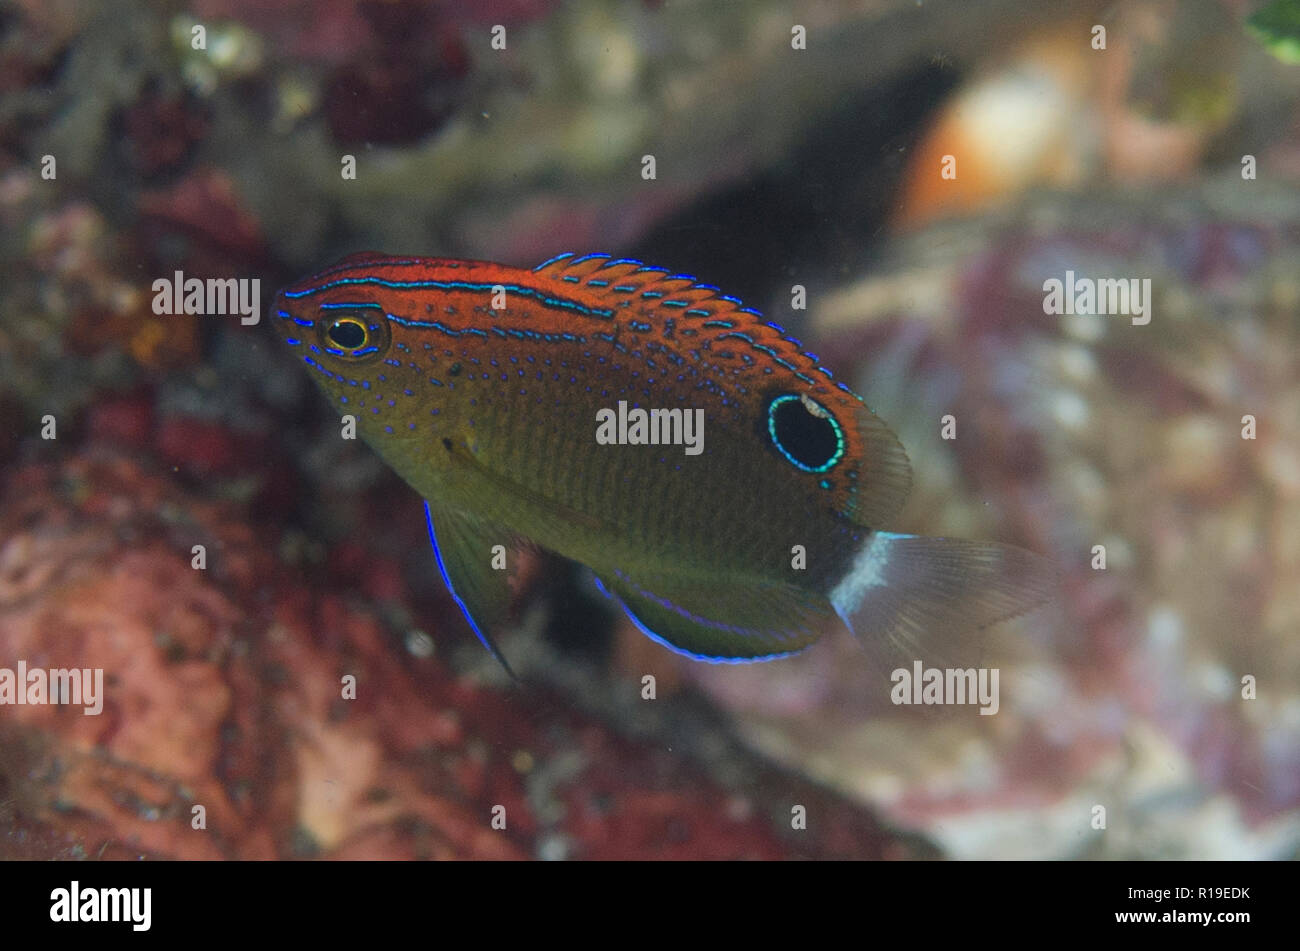 Speckled Damsel, Pomacentrus bankanensis, TK1 dive site, Lembeh Straits, Sulawesi, Indonesia Stock Photo